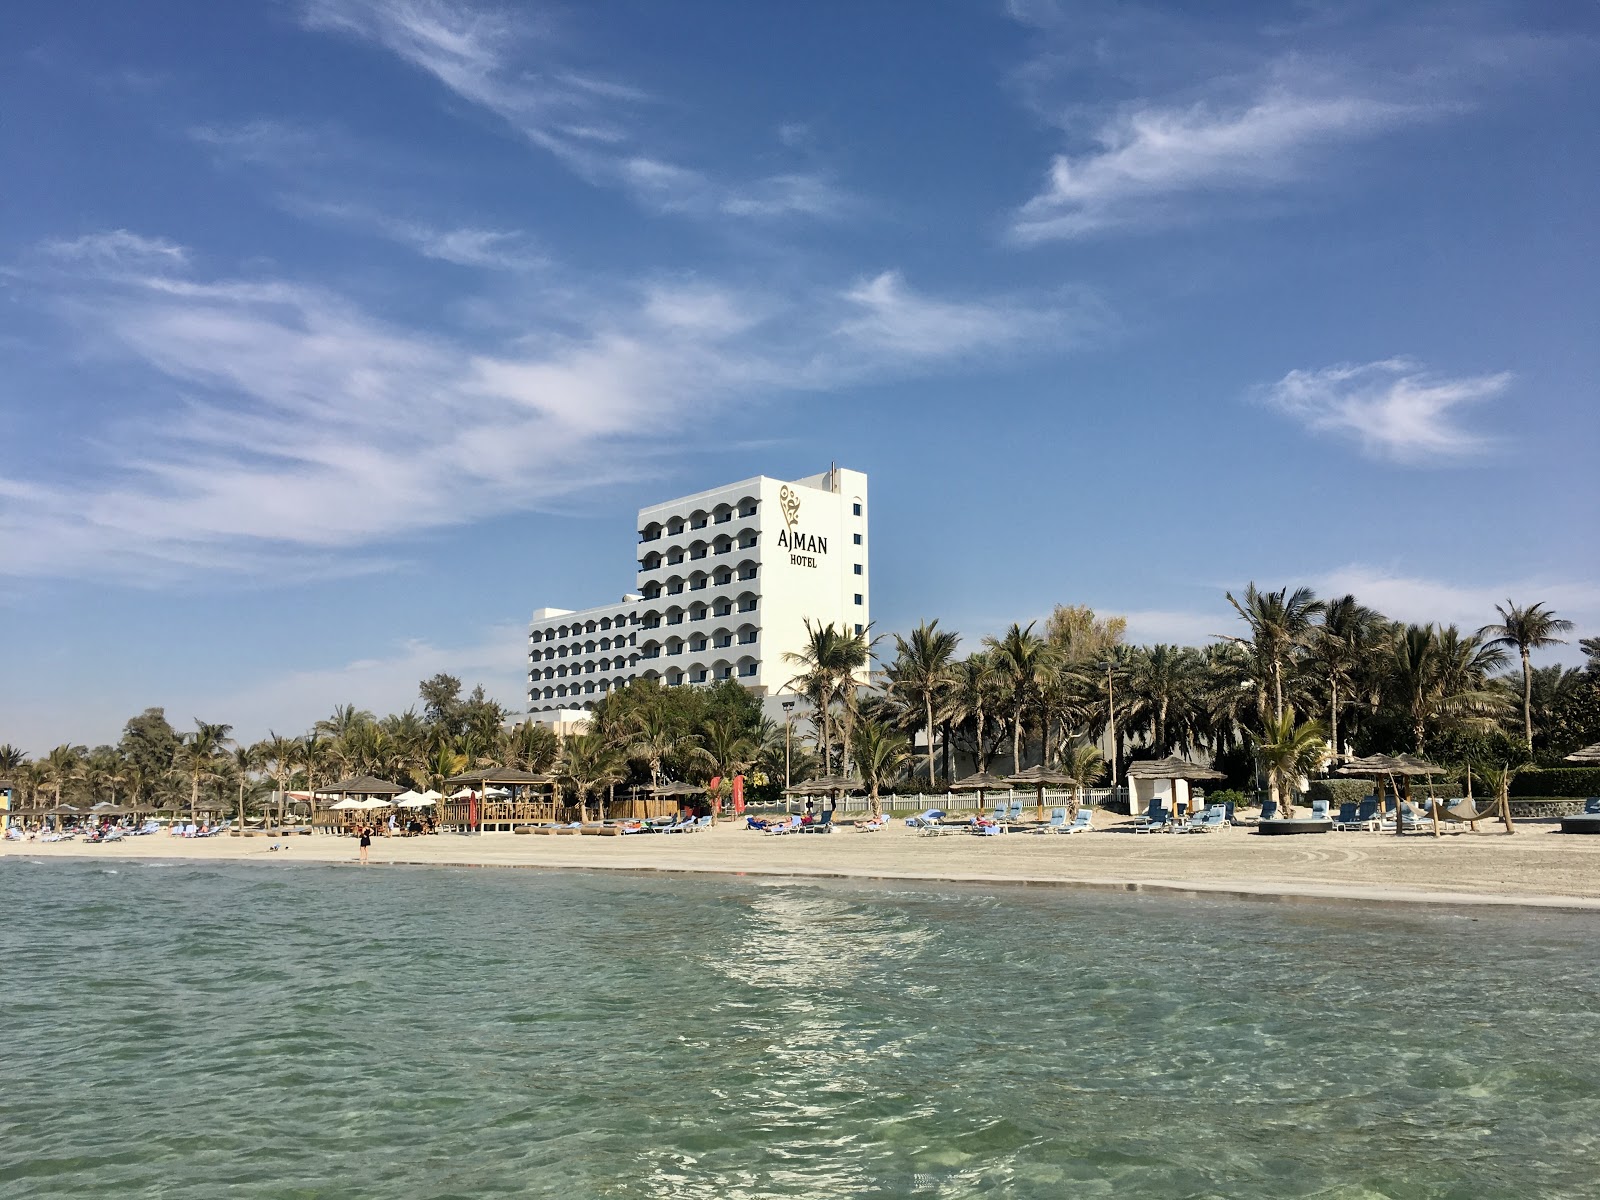 Photo of Ajman resort beach - popular place among relax connoisseurs